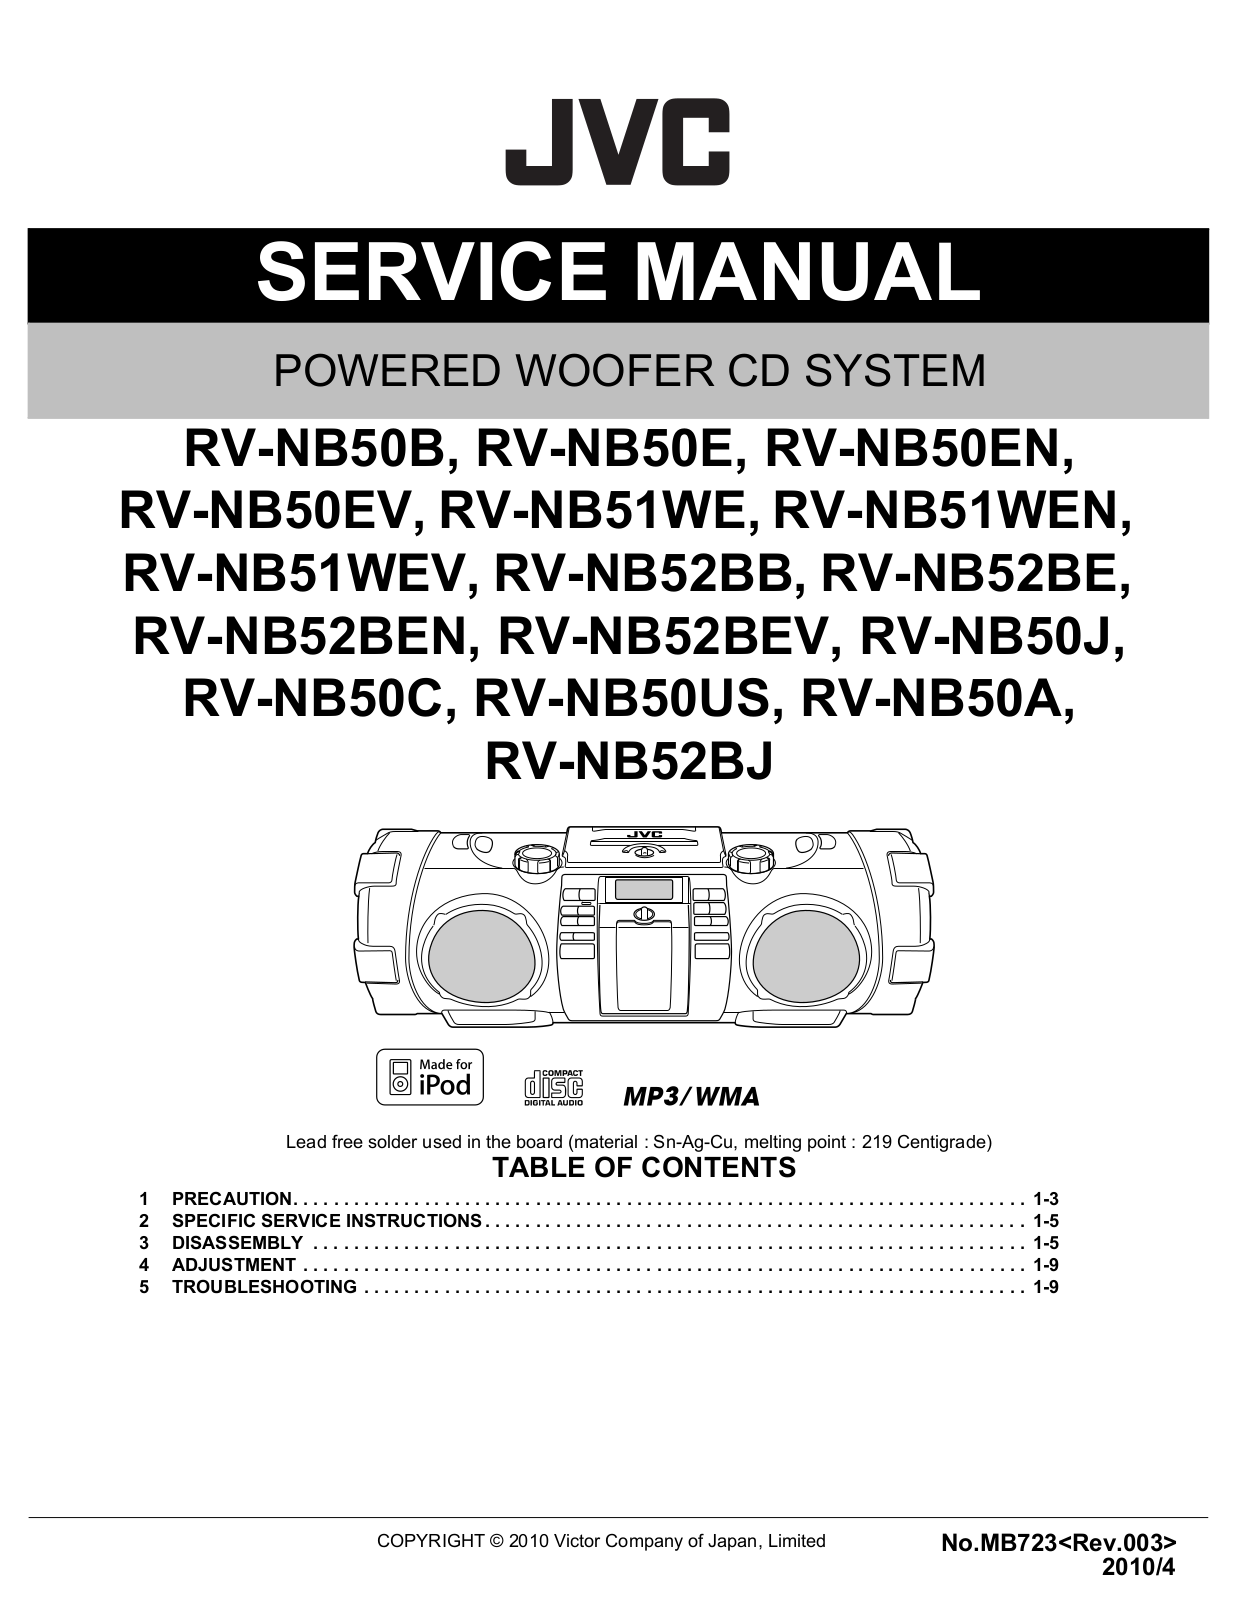 Jvc RV-NB50-B Service Manual